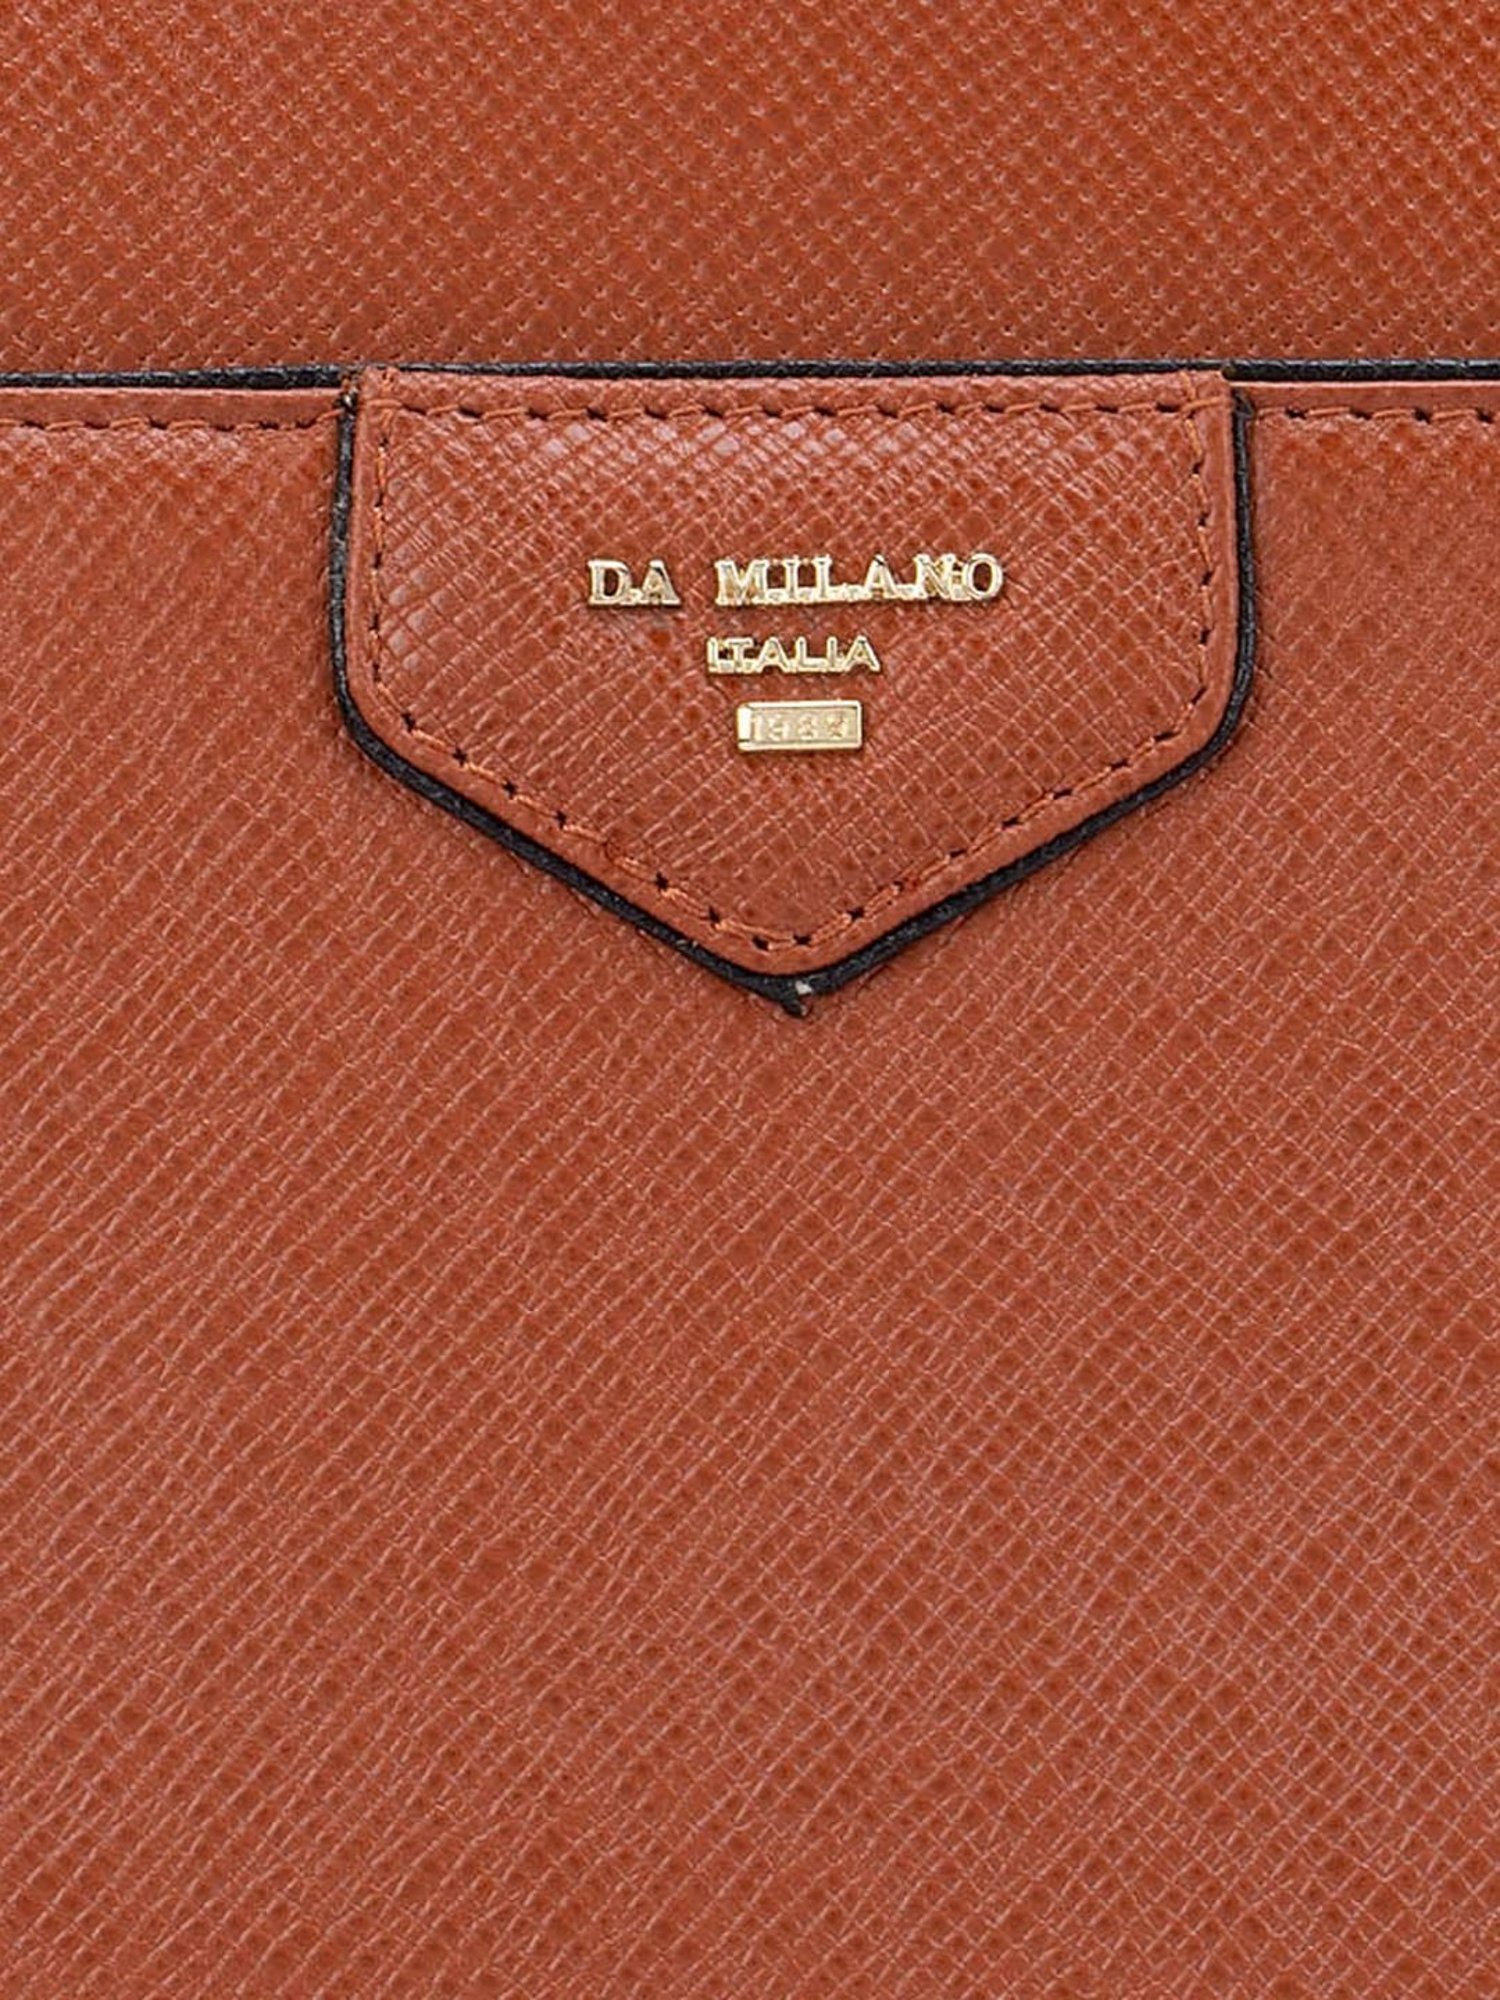 Prada Monochrome Saffiano and leather bag